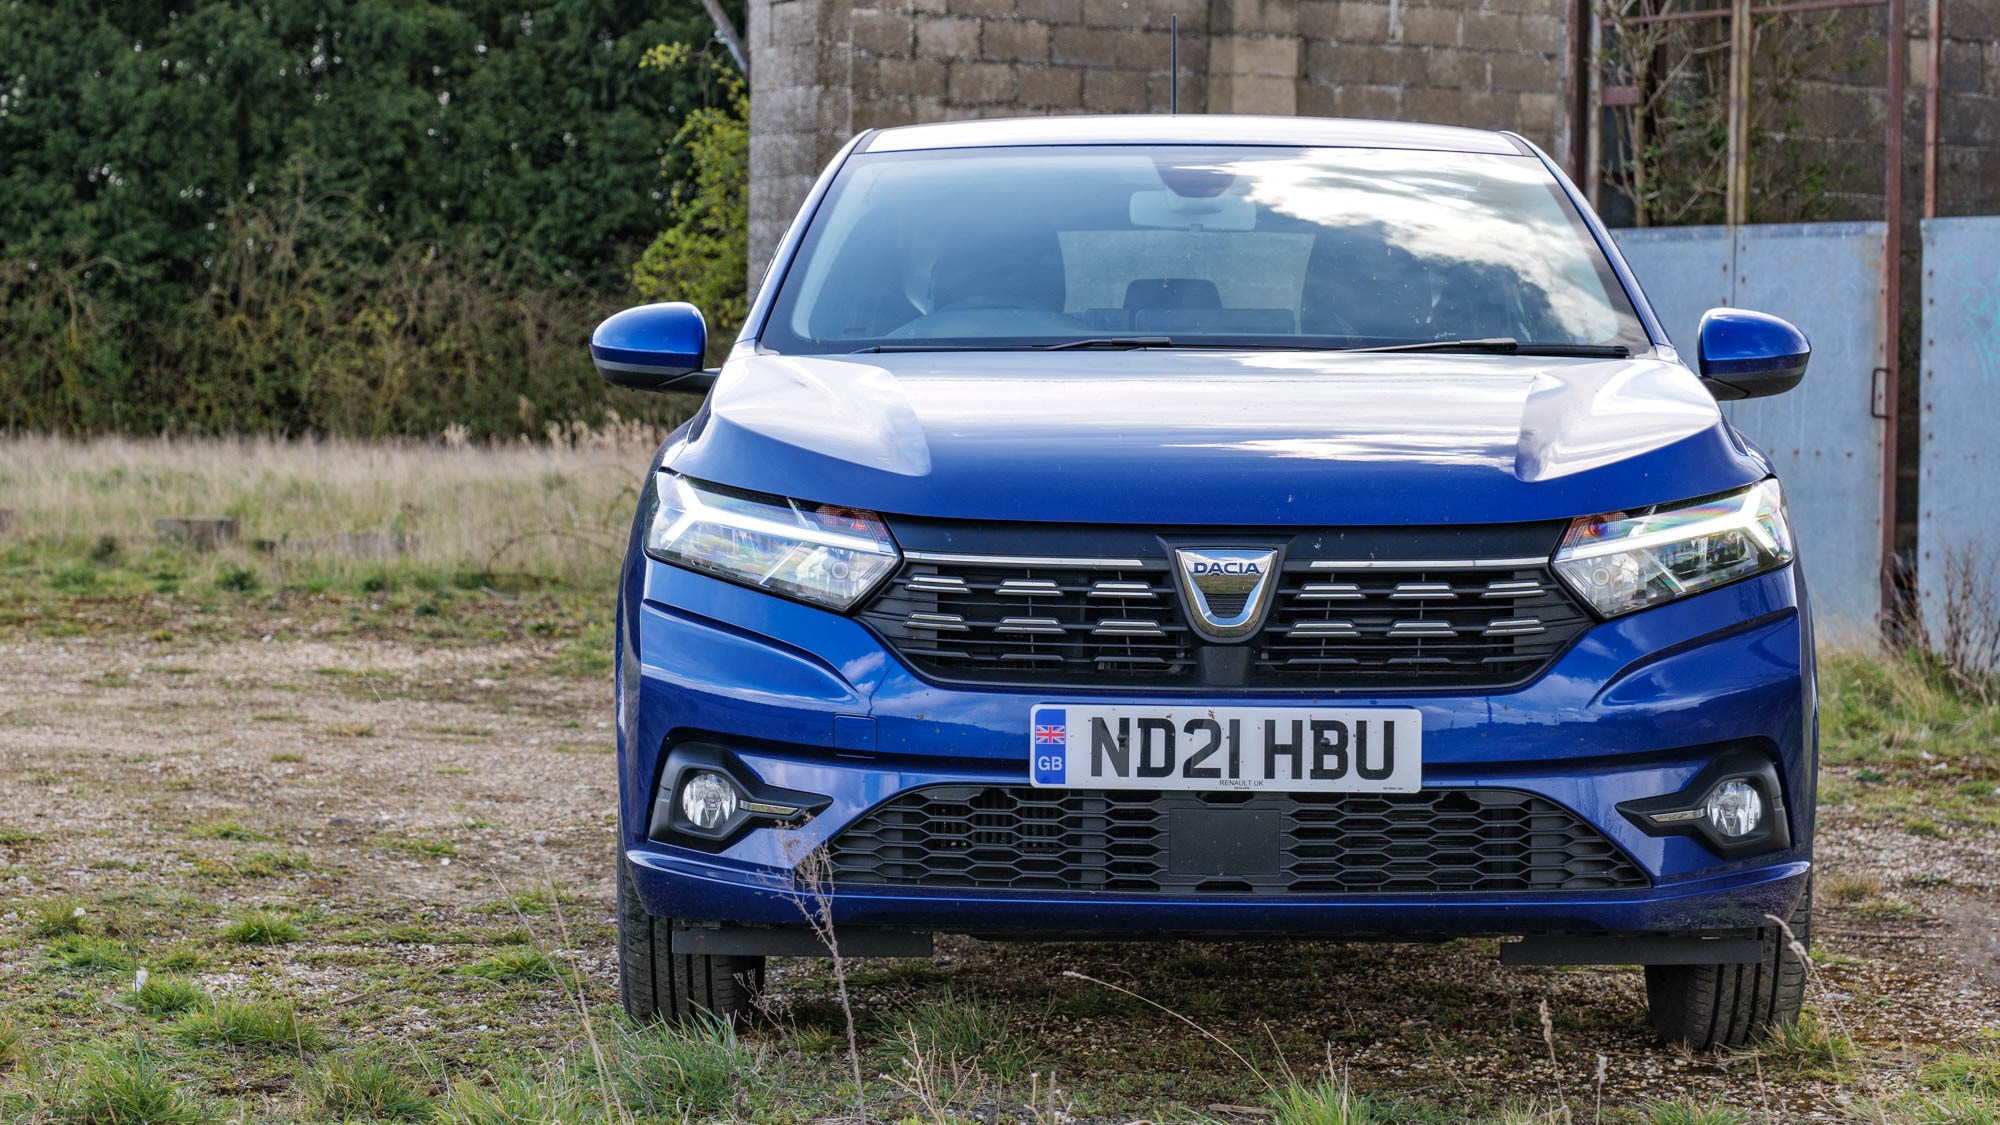 2021 Dacia Sandero Comfort front view, blue